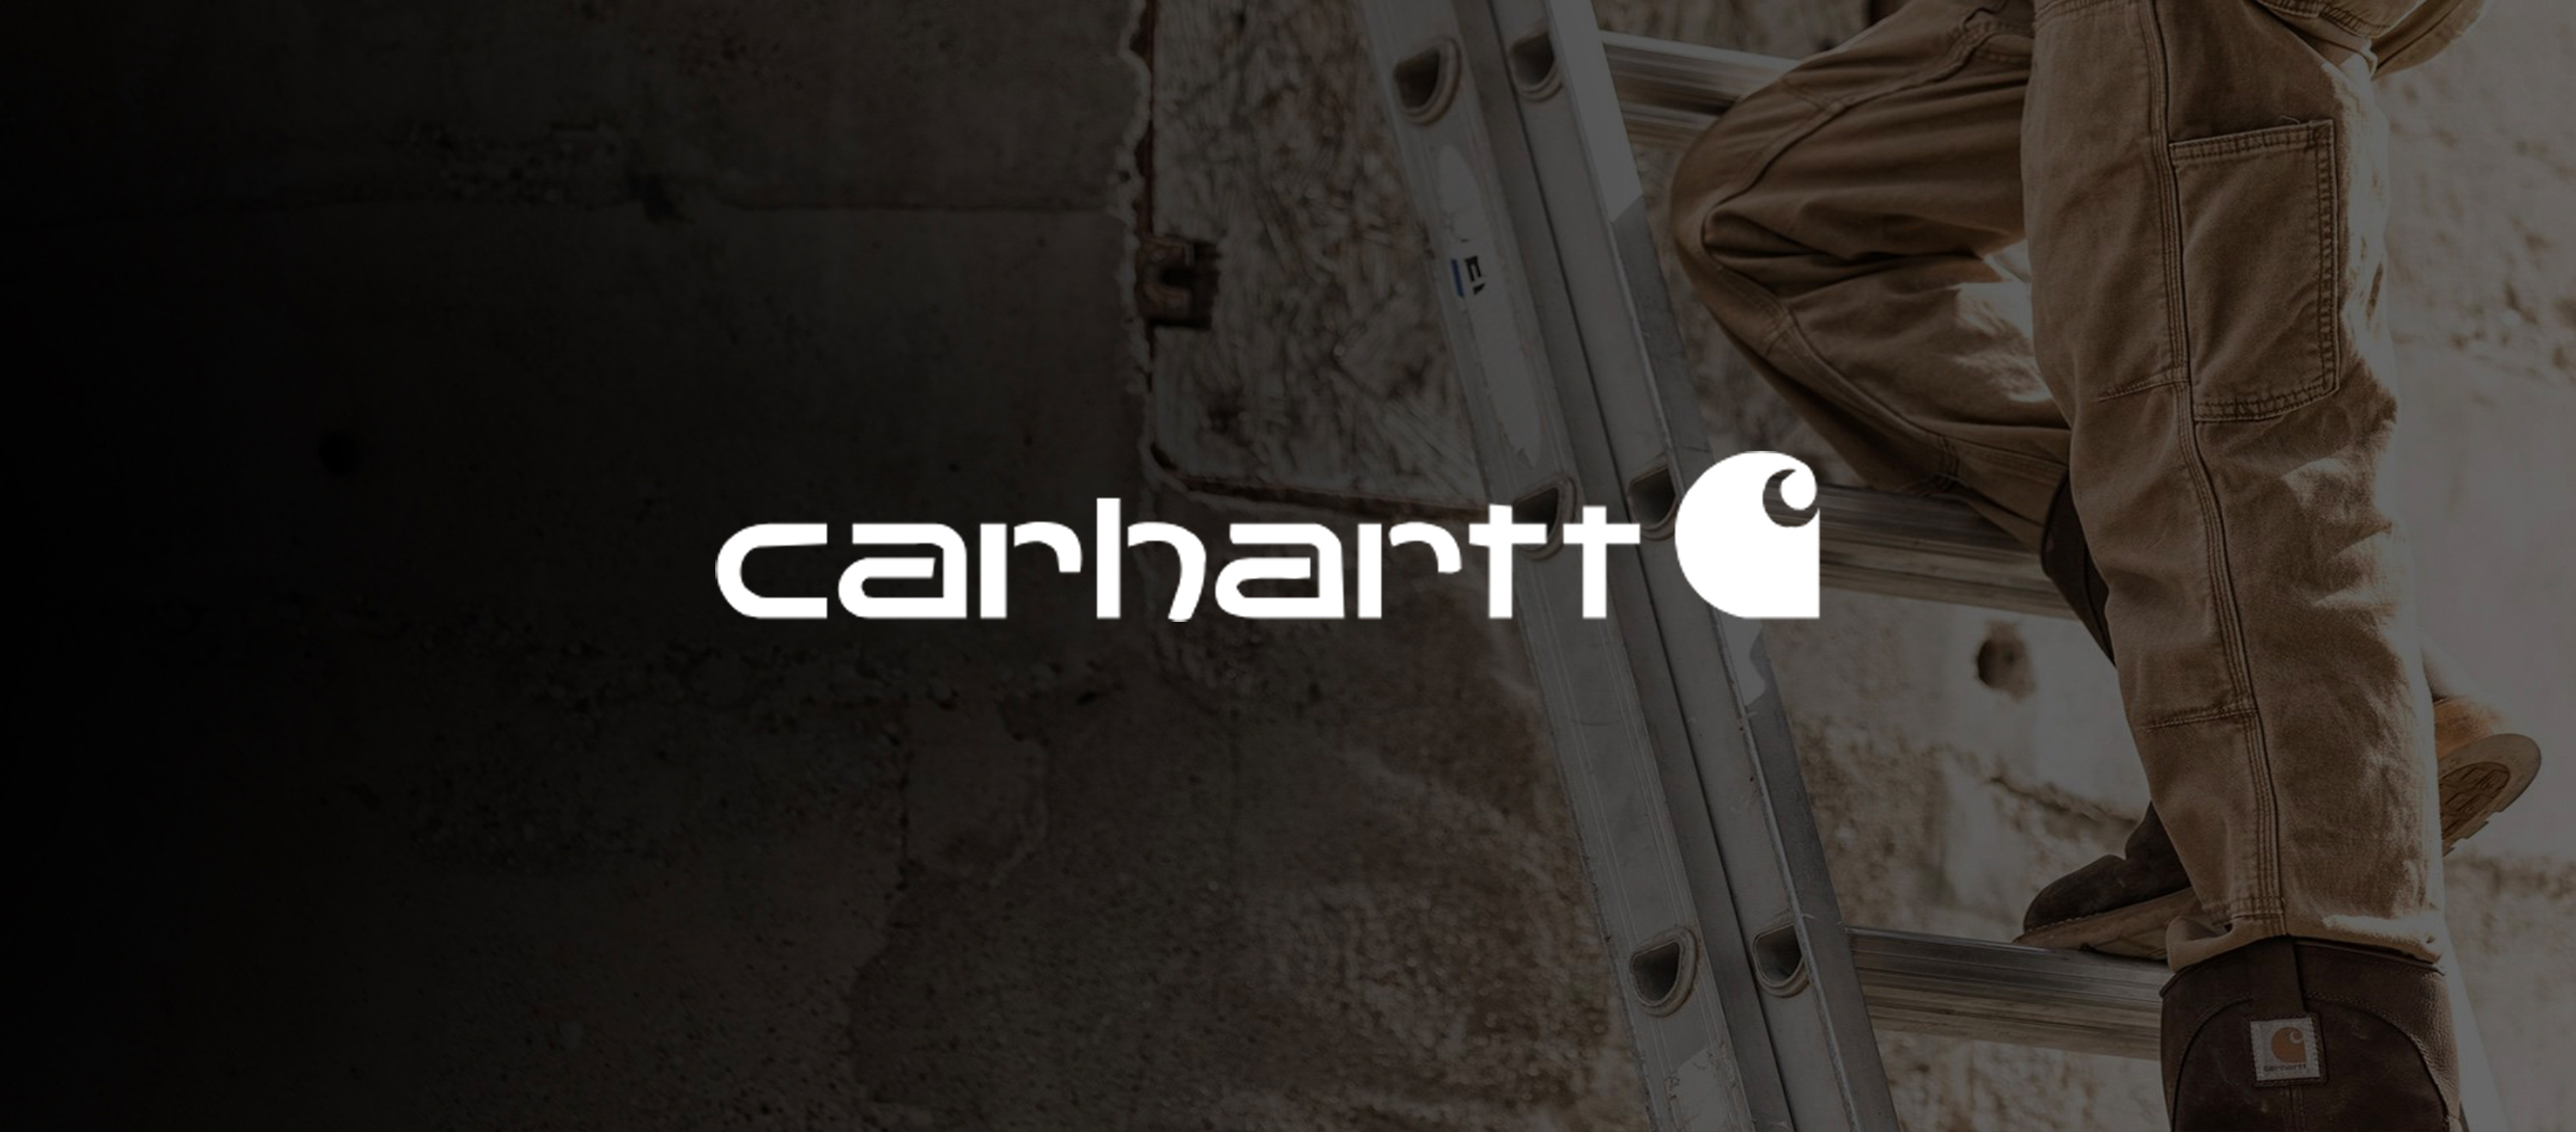 carhartt-bannerimage-1